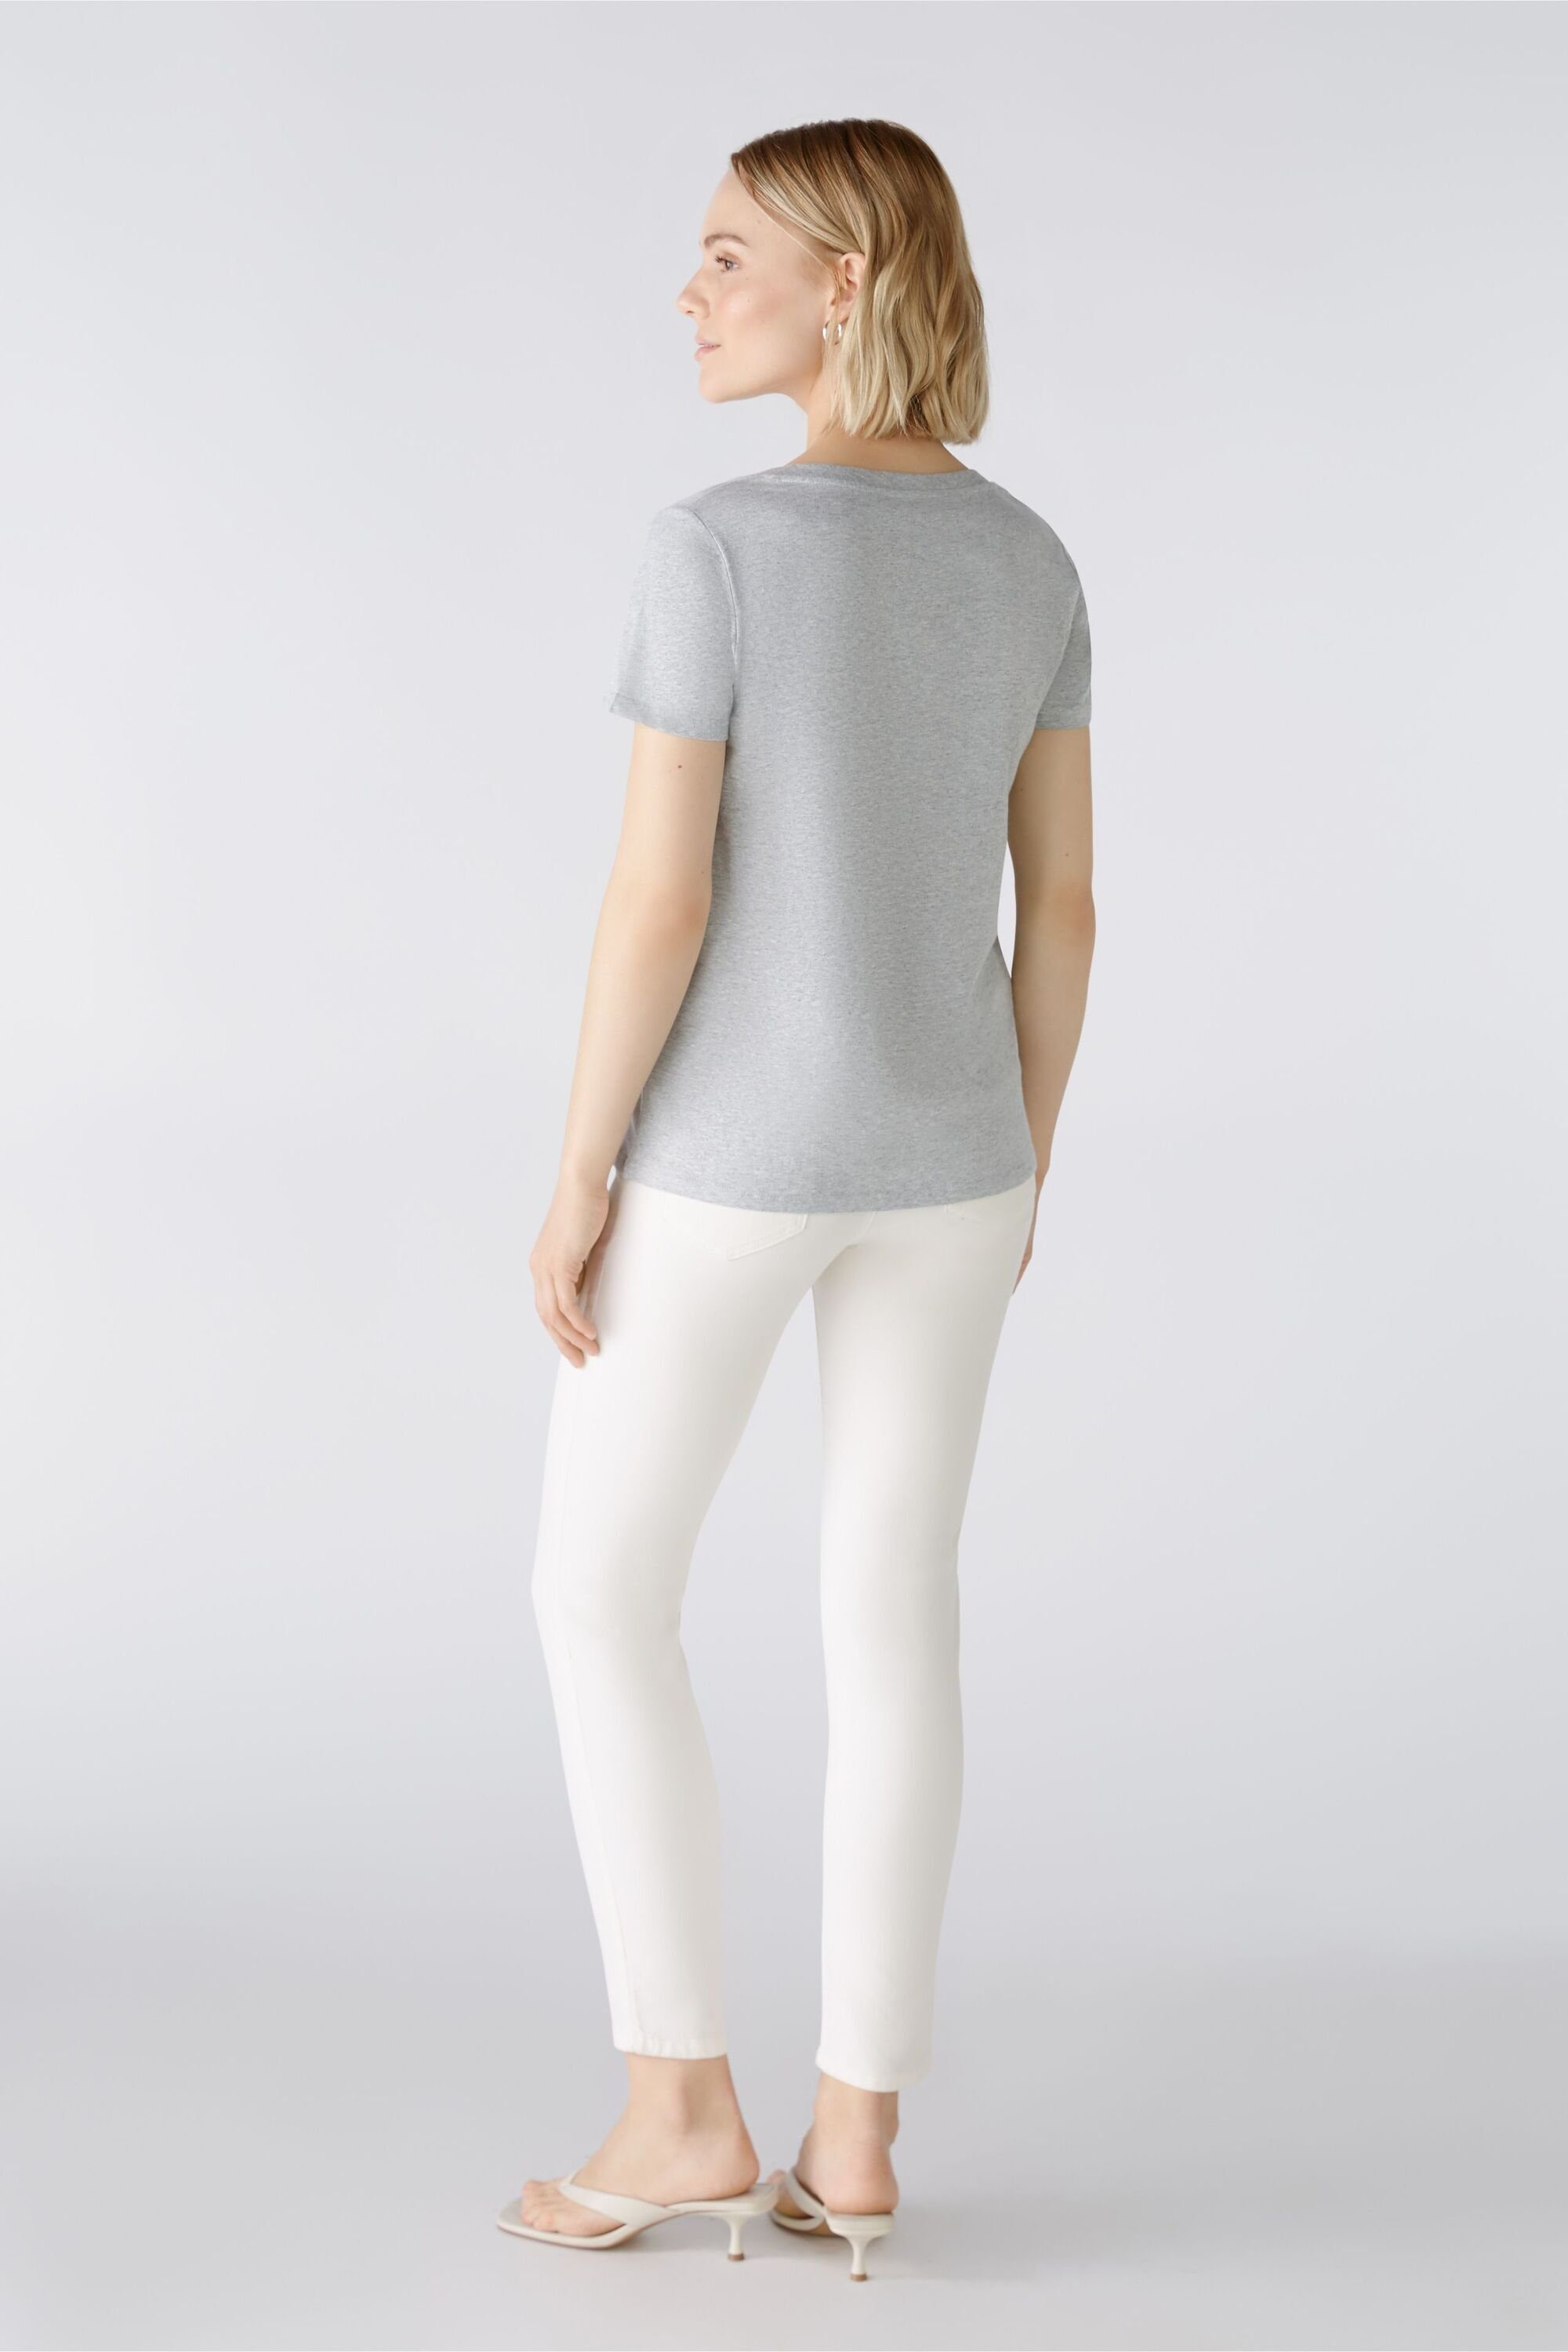 T-Shirt light T-Shirt 100% Bio-Baumwolle grey CARLI Oui